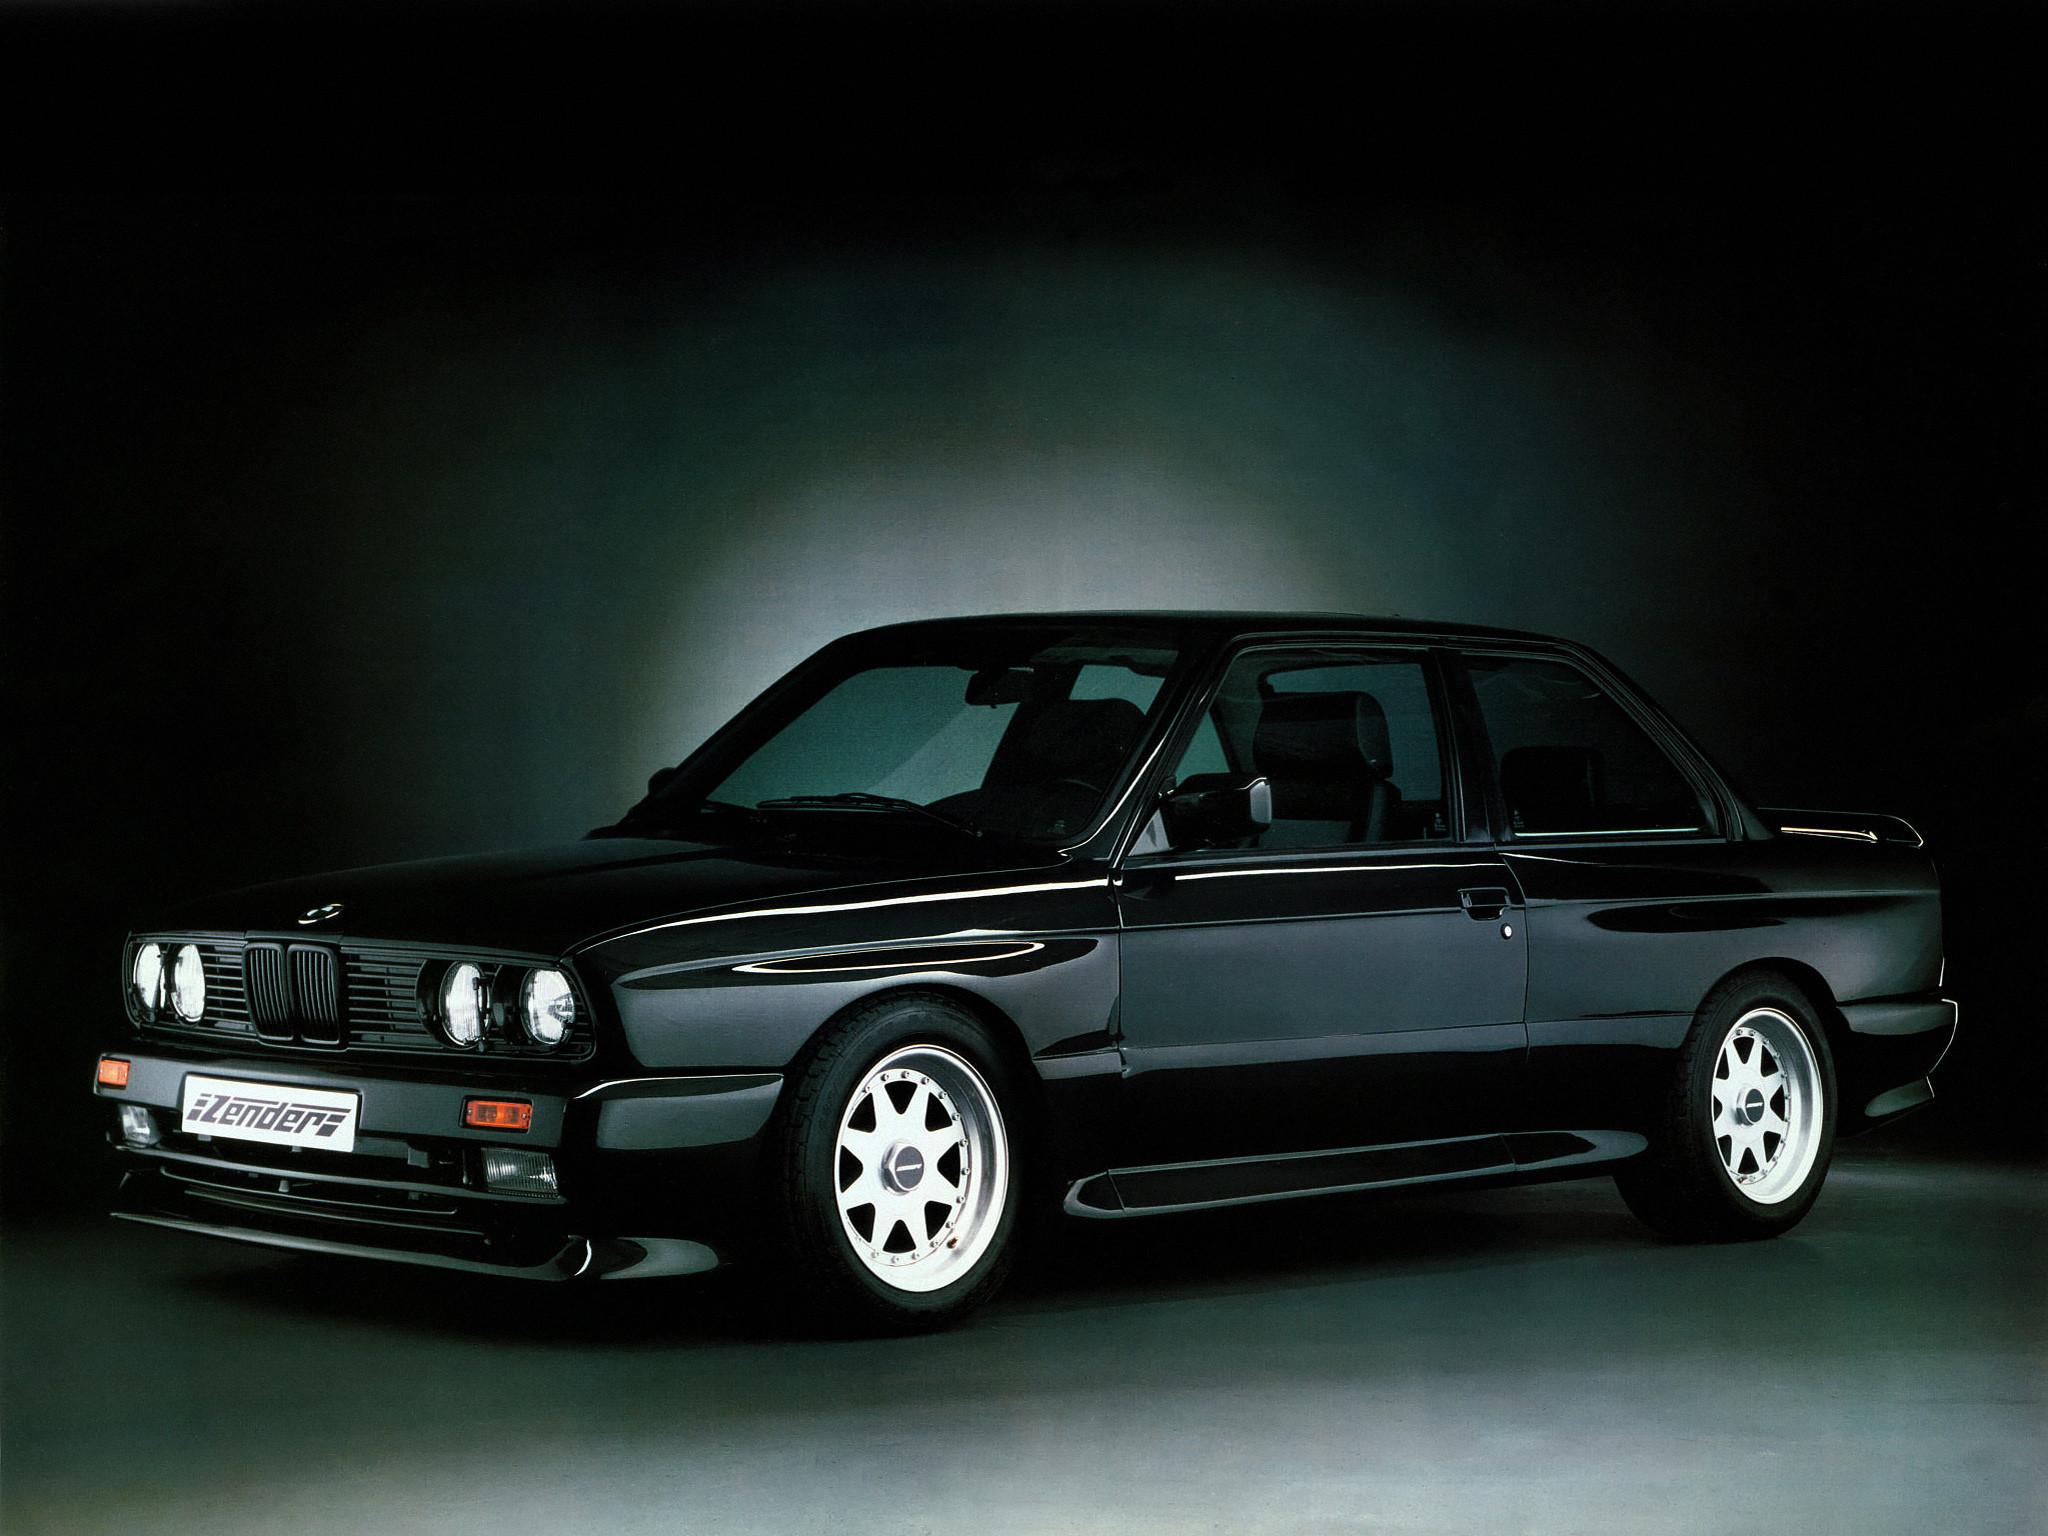 2048x1536 BMW E30 M3 turbo - http://imashon.com/w/auto/bmw-e30-m3-turbo.html |  WallPapers | Pinterest | Autos bmw